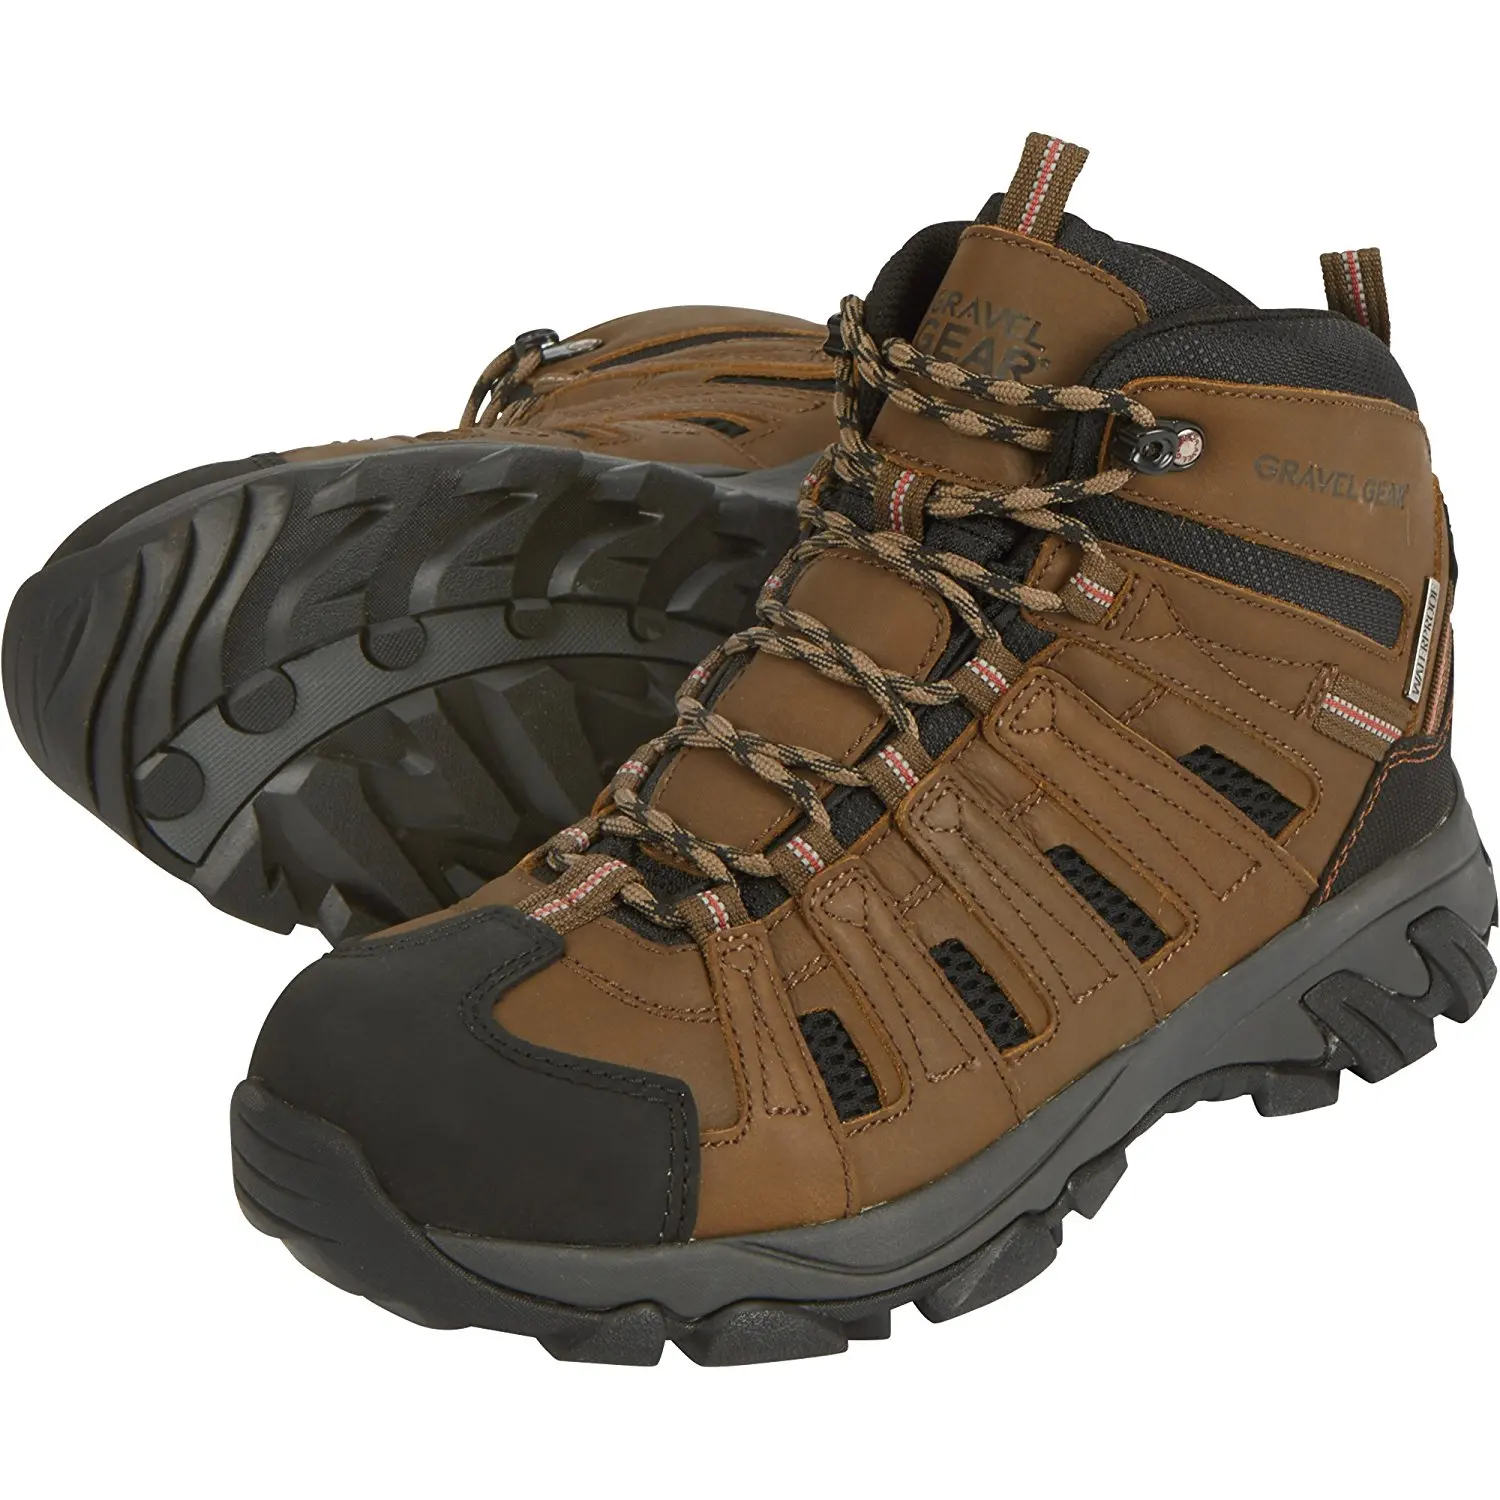 Buy Gravel Gear 6in. Waterproof Steel Toe Work Boots - Copper Brown ...